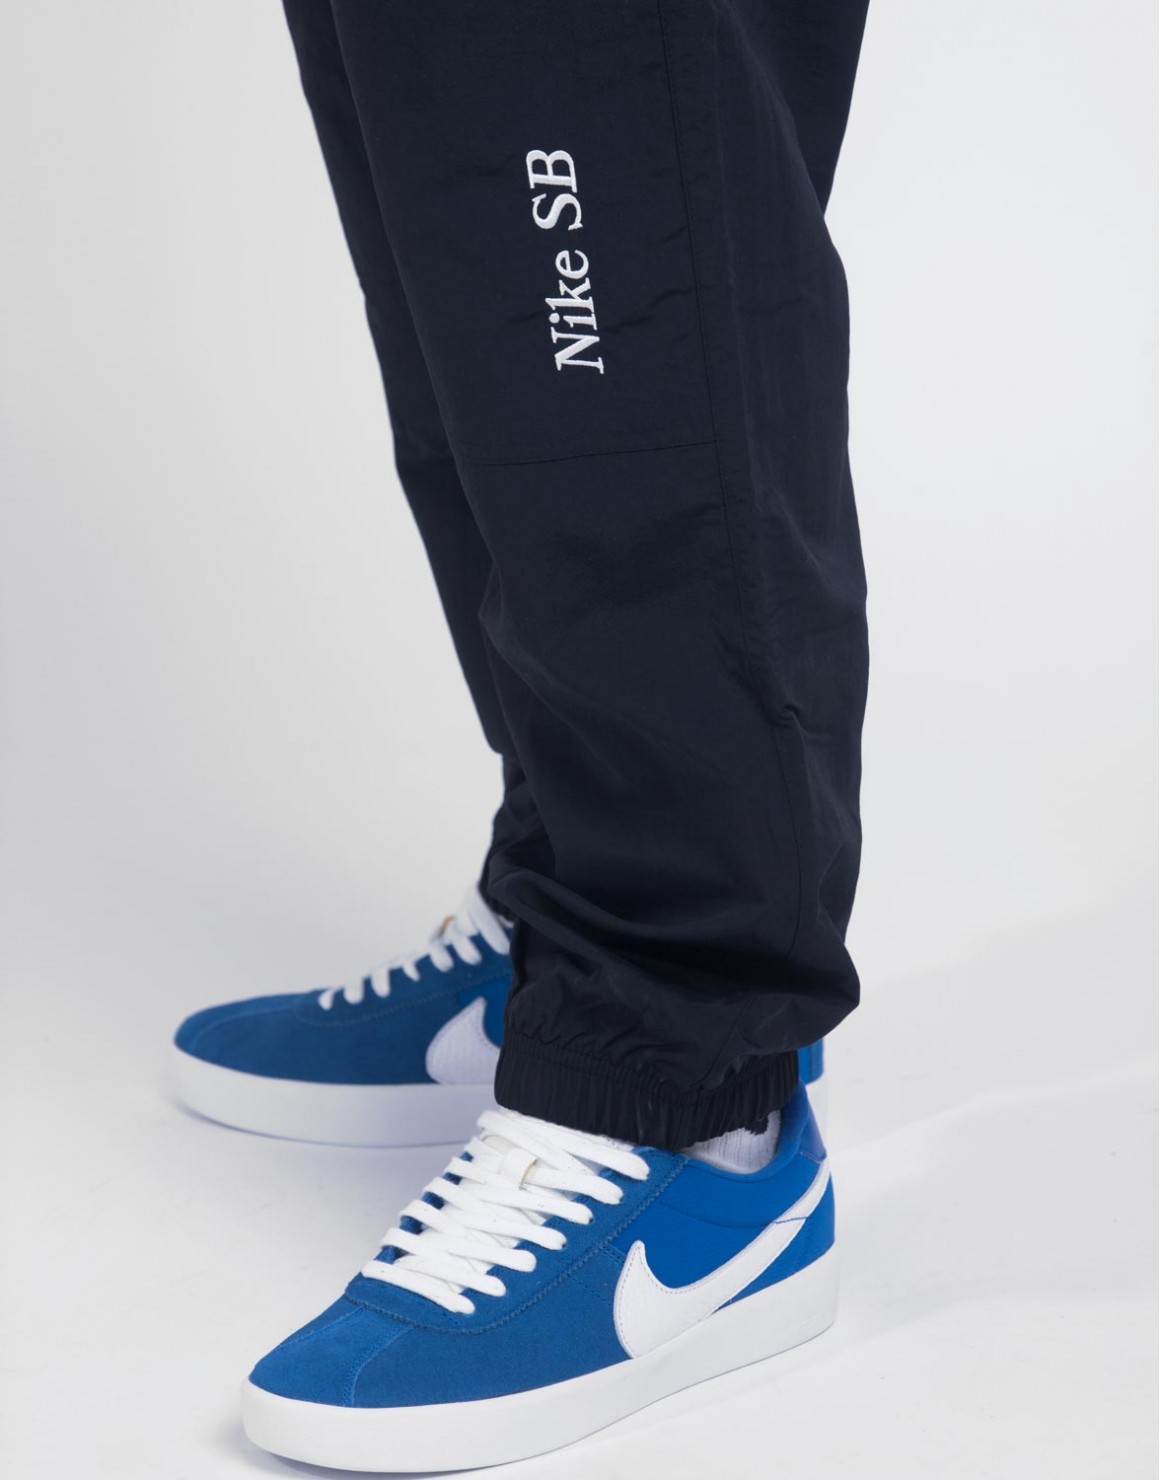 W2C Nike Y2K track pants : r/Pandabuy